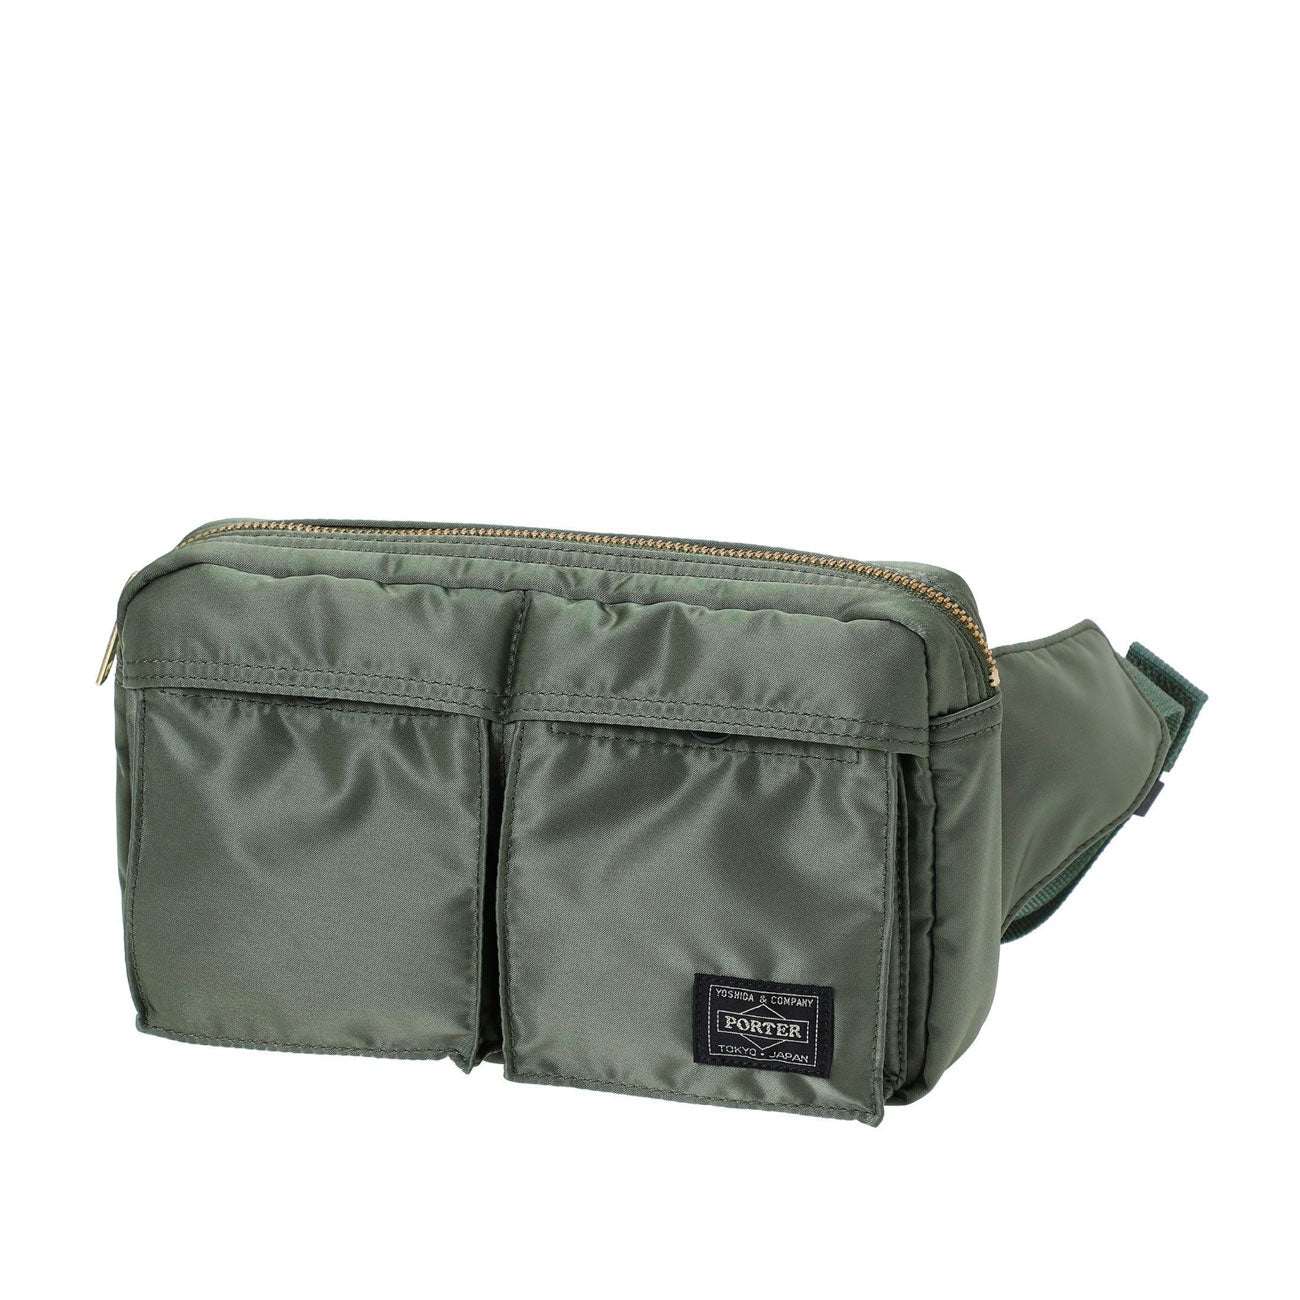 porter by yoshida tanker waist bag (sage green) - 622-78723-30 - a